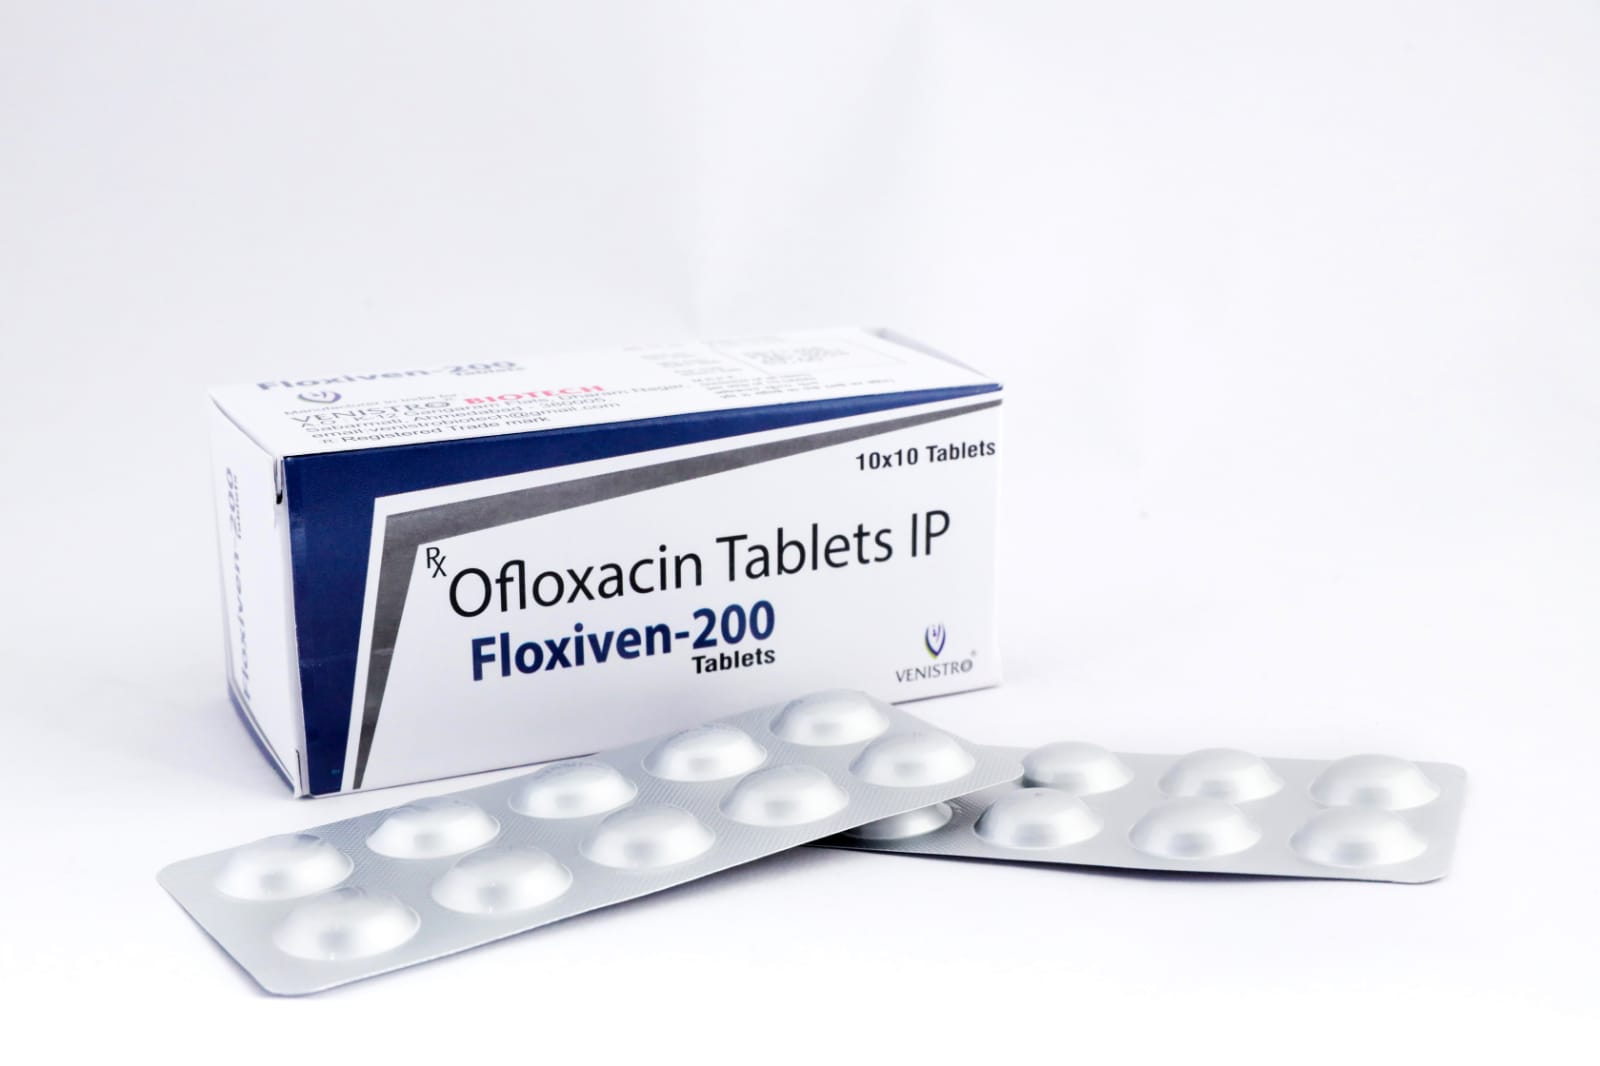 Floxiven-200 Tablets